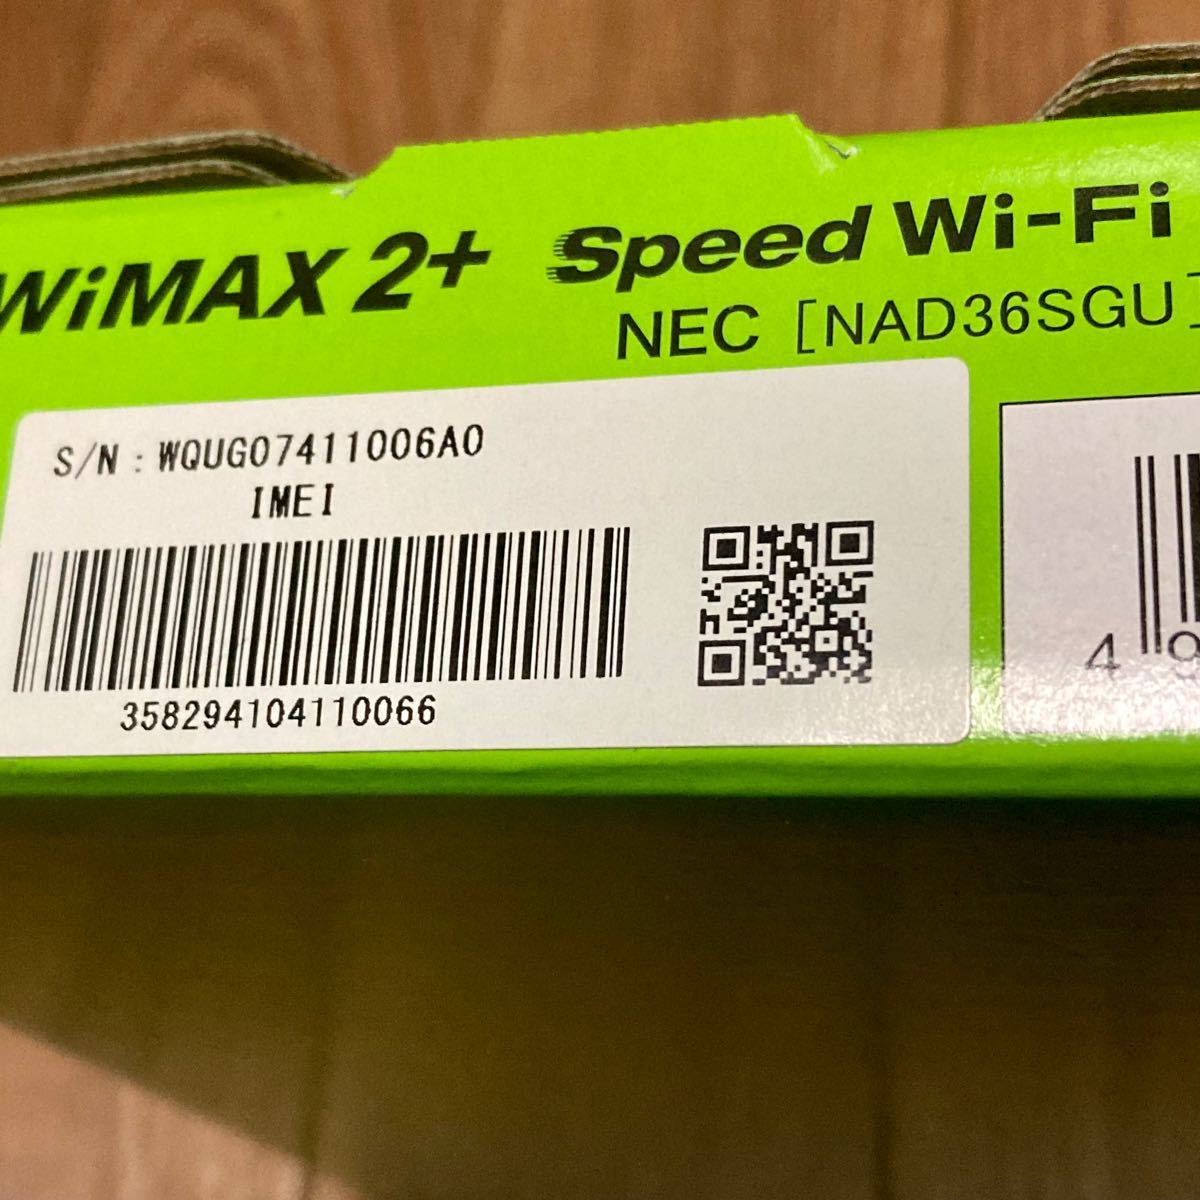 wx06 NEC モバイルルーター Pocket WiFi UQ WiMAX ライムグリーン SPEED Wi-Fi NEXT